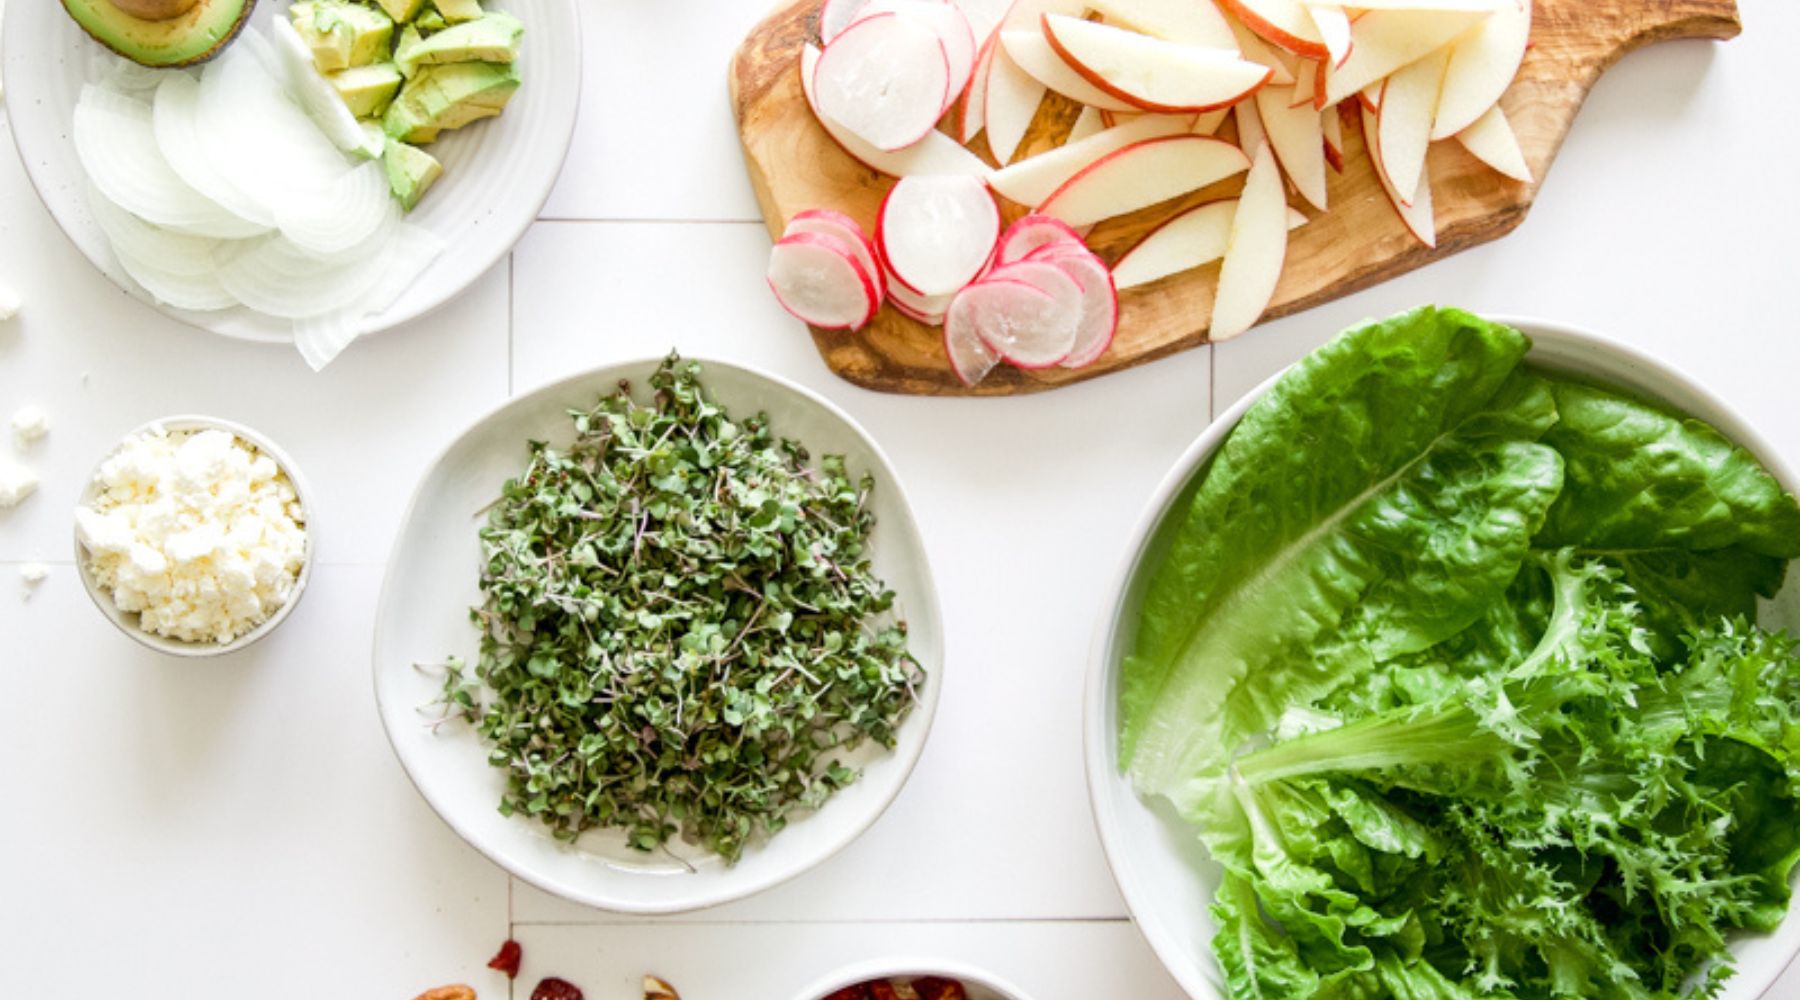 microgreens salad